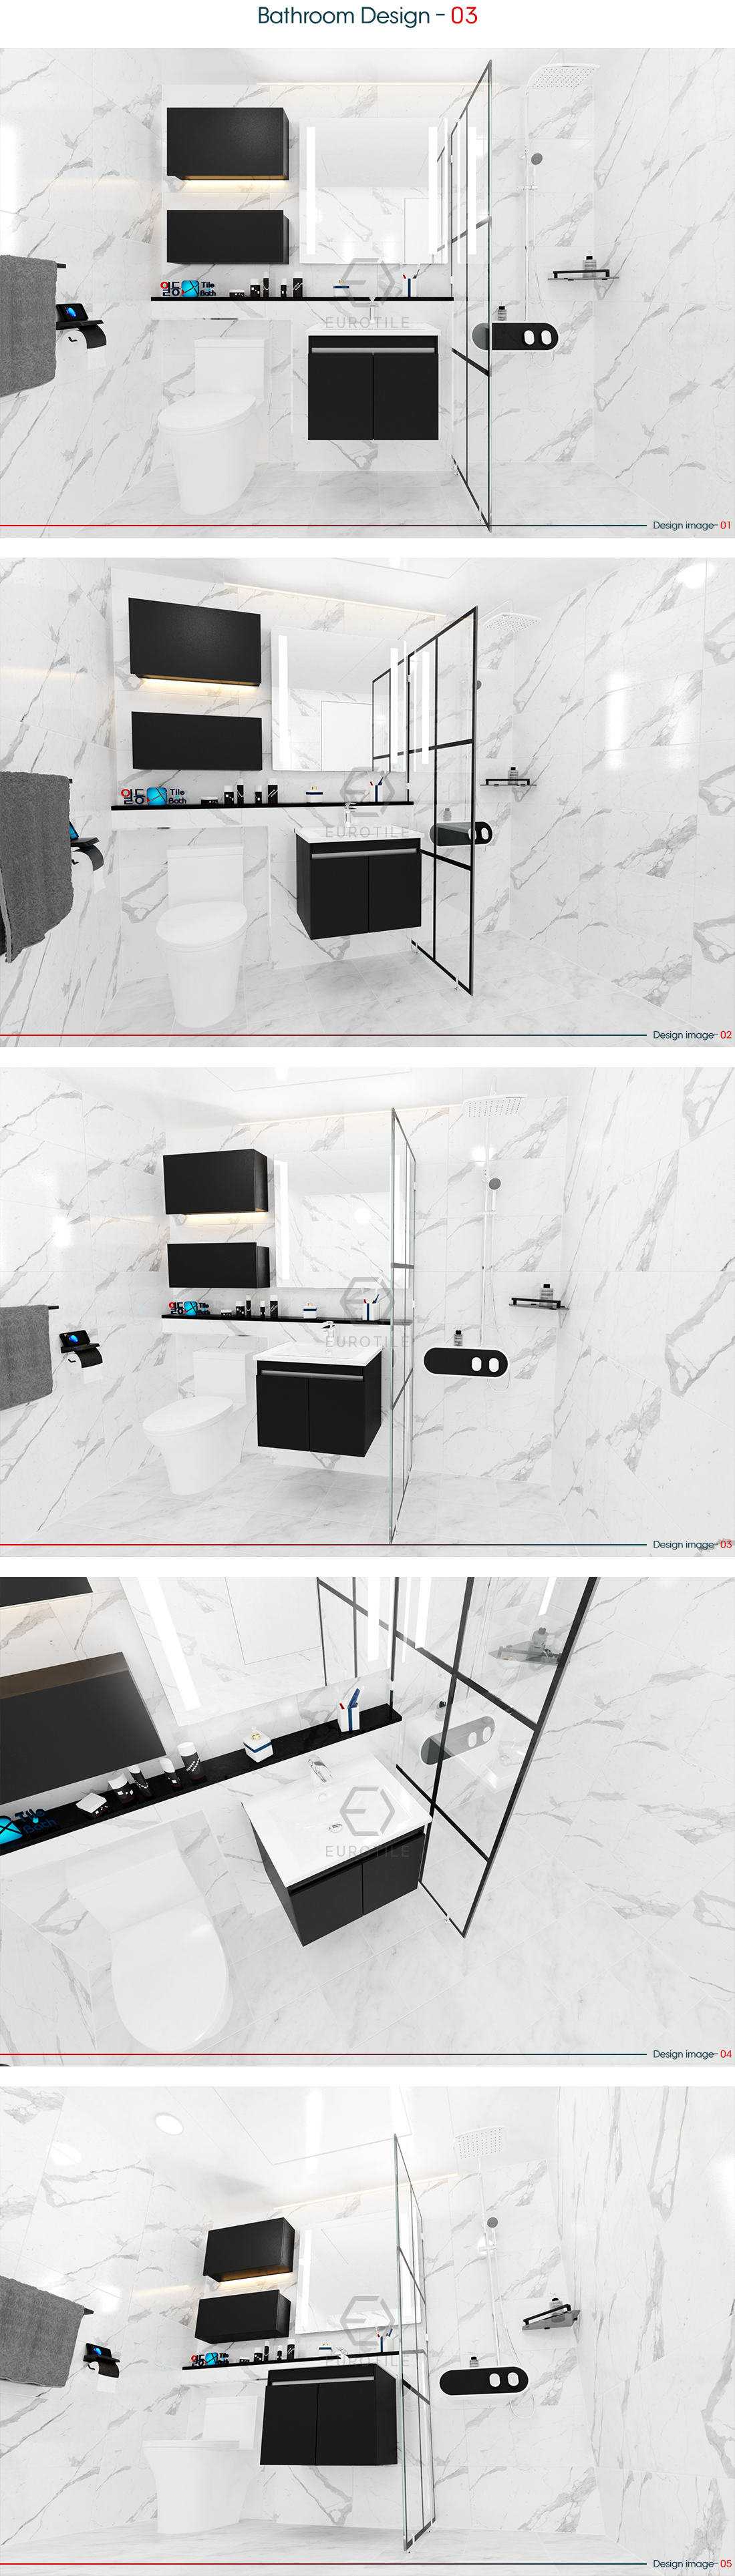 bathroomdesign-03_110051.jpg